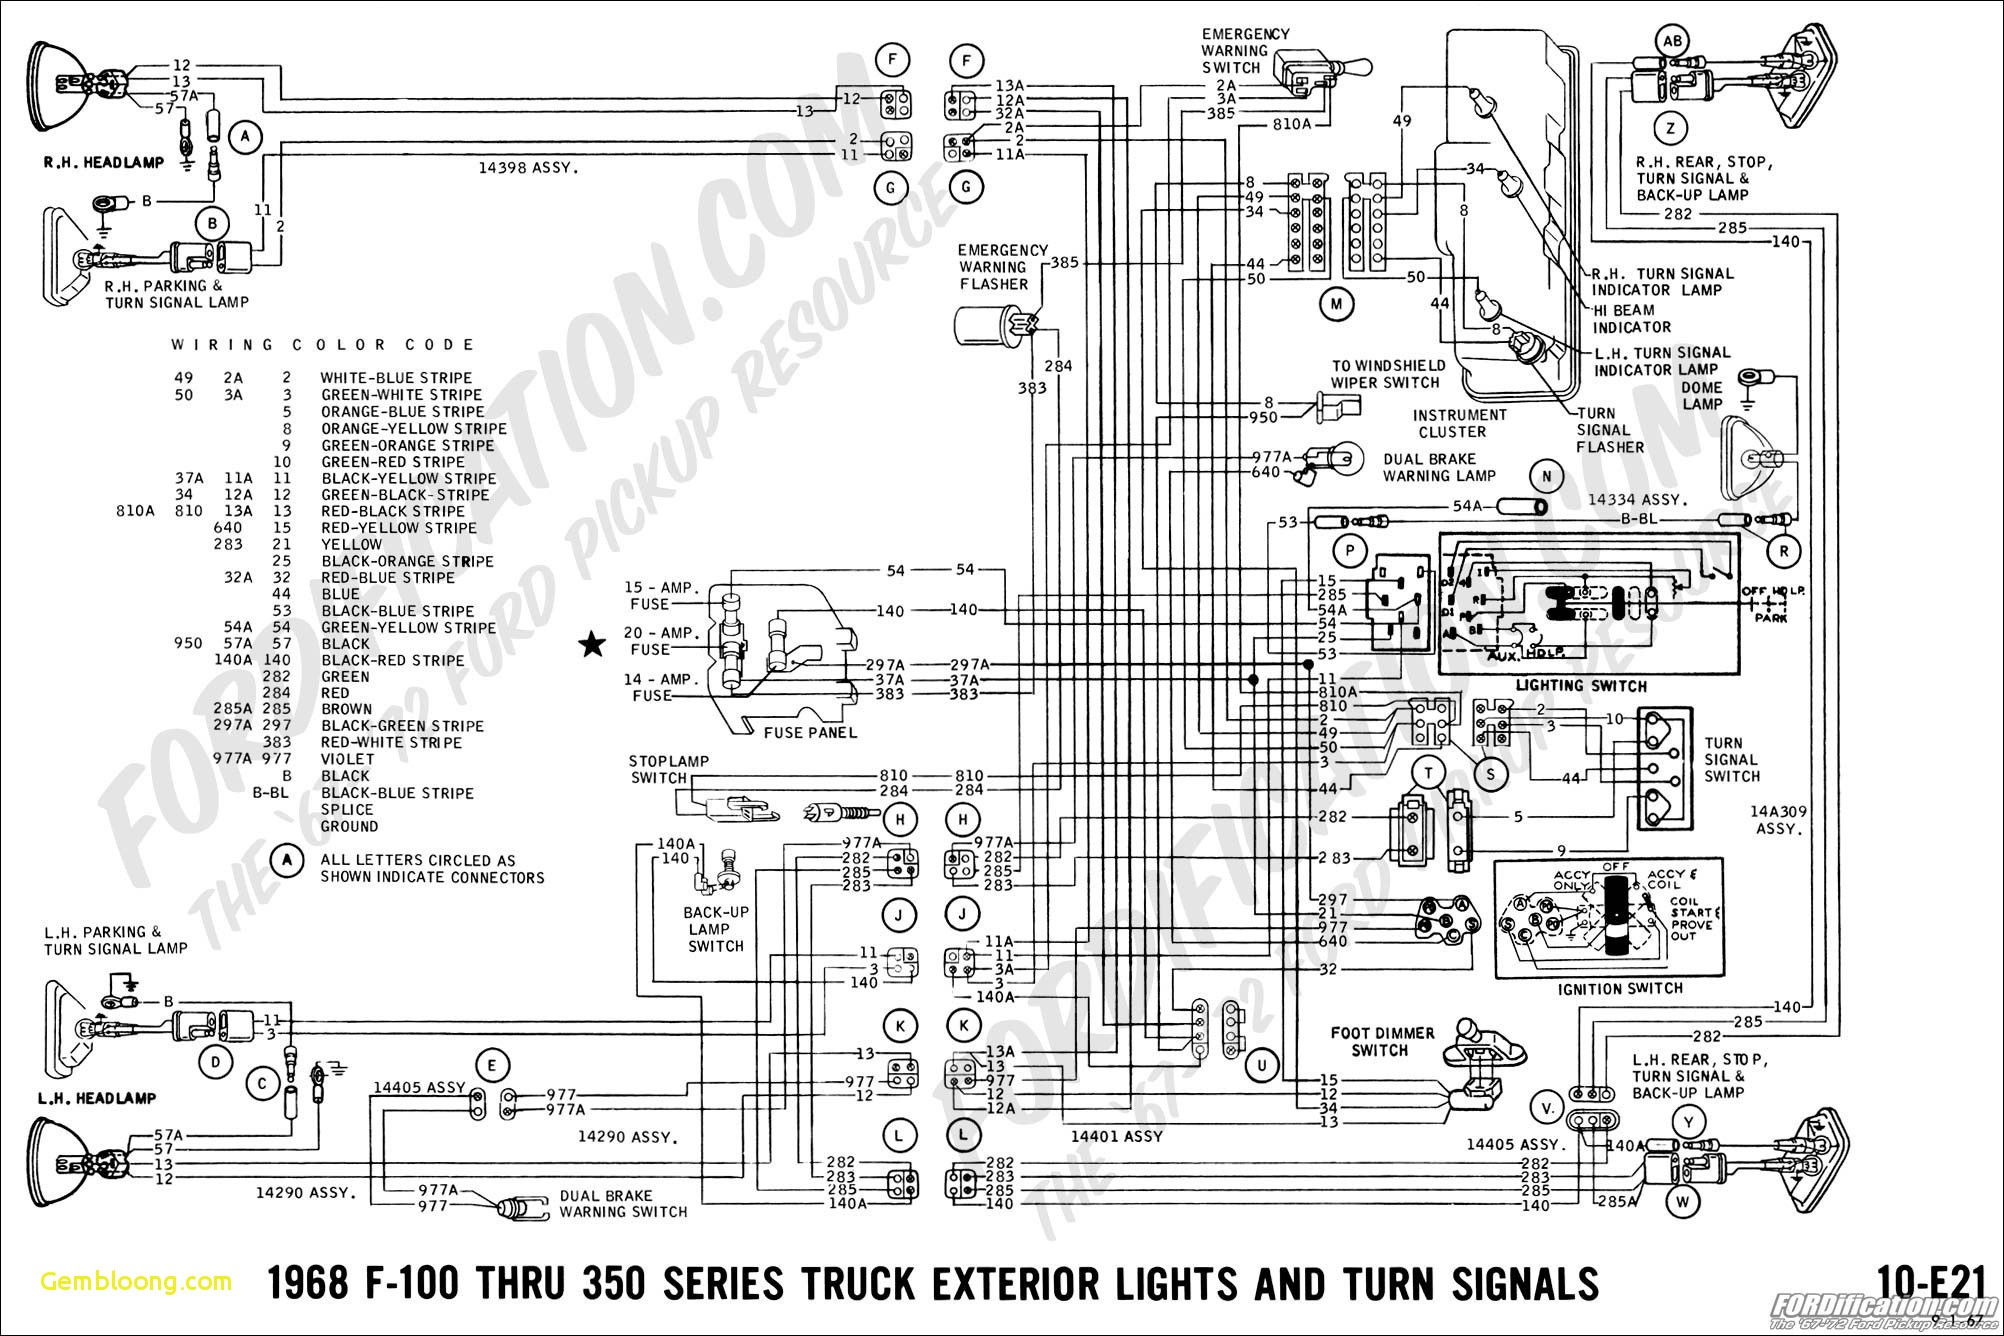 2004 ford F150 Wiring Diagram Download ford Trucks Wiring Diagrams ford Truck Wiring Diagrams Of 2004 ford F150 Wiring Diagram